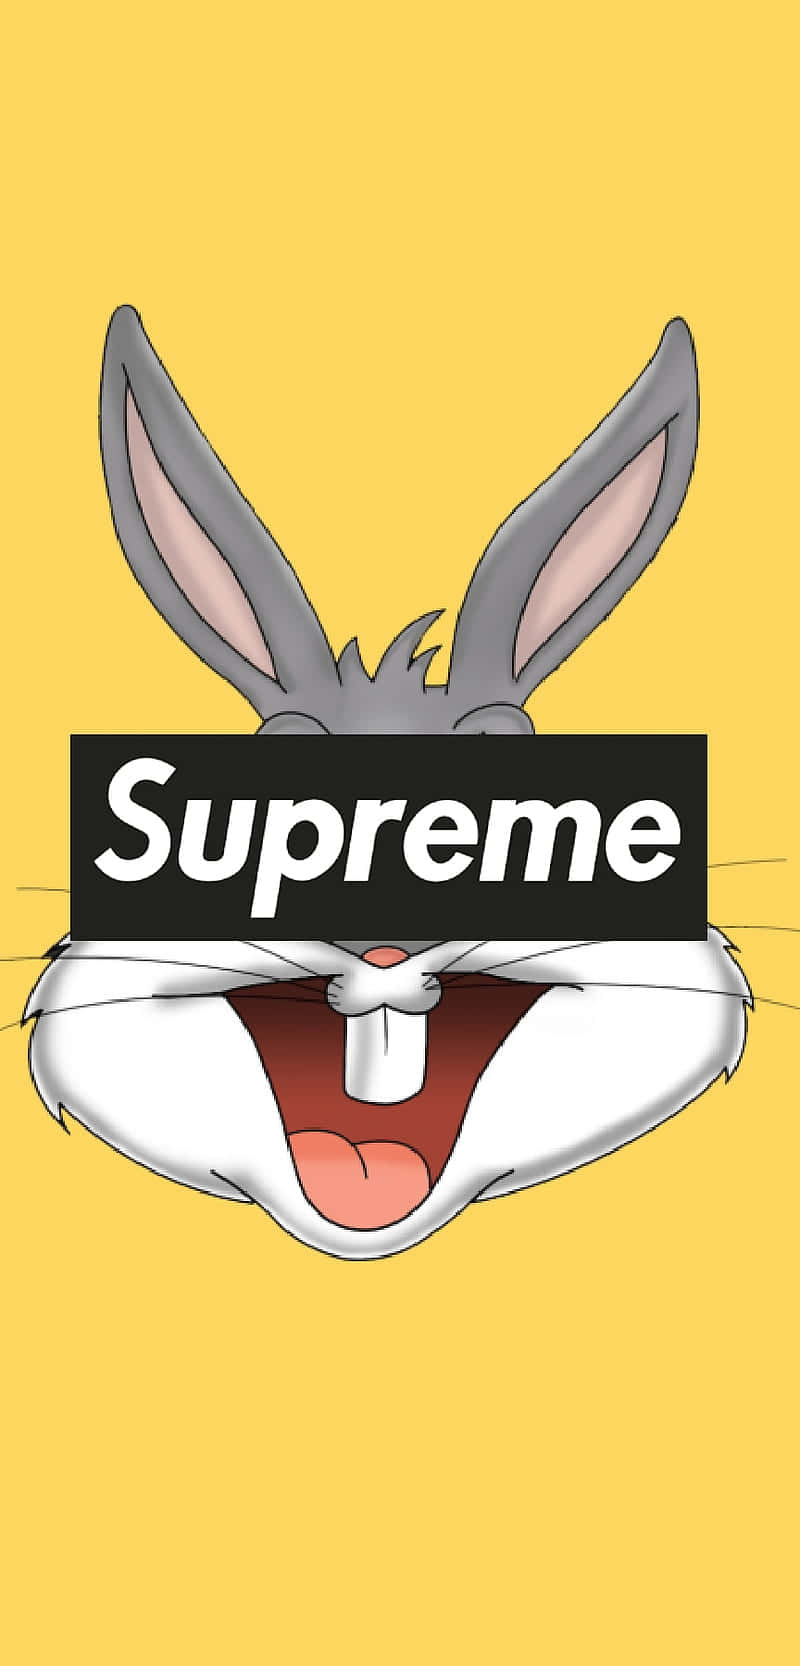 Free Bugs Bunny Supreme Wallpaper Downloads, Bugs Bunny Supreme Wallpaper for FREE